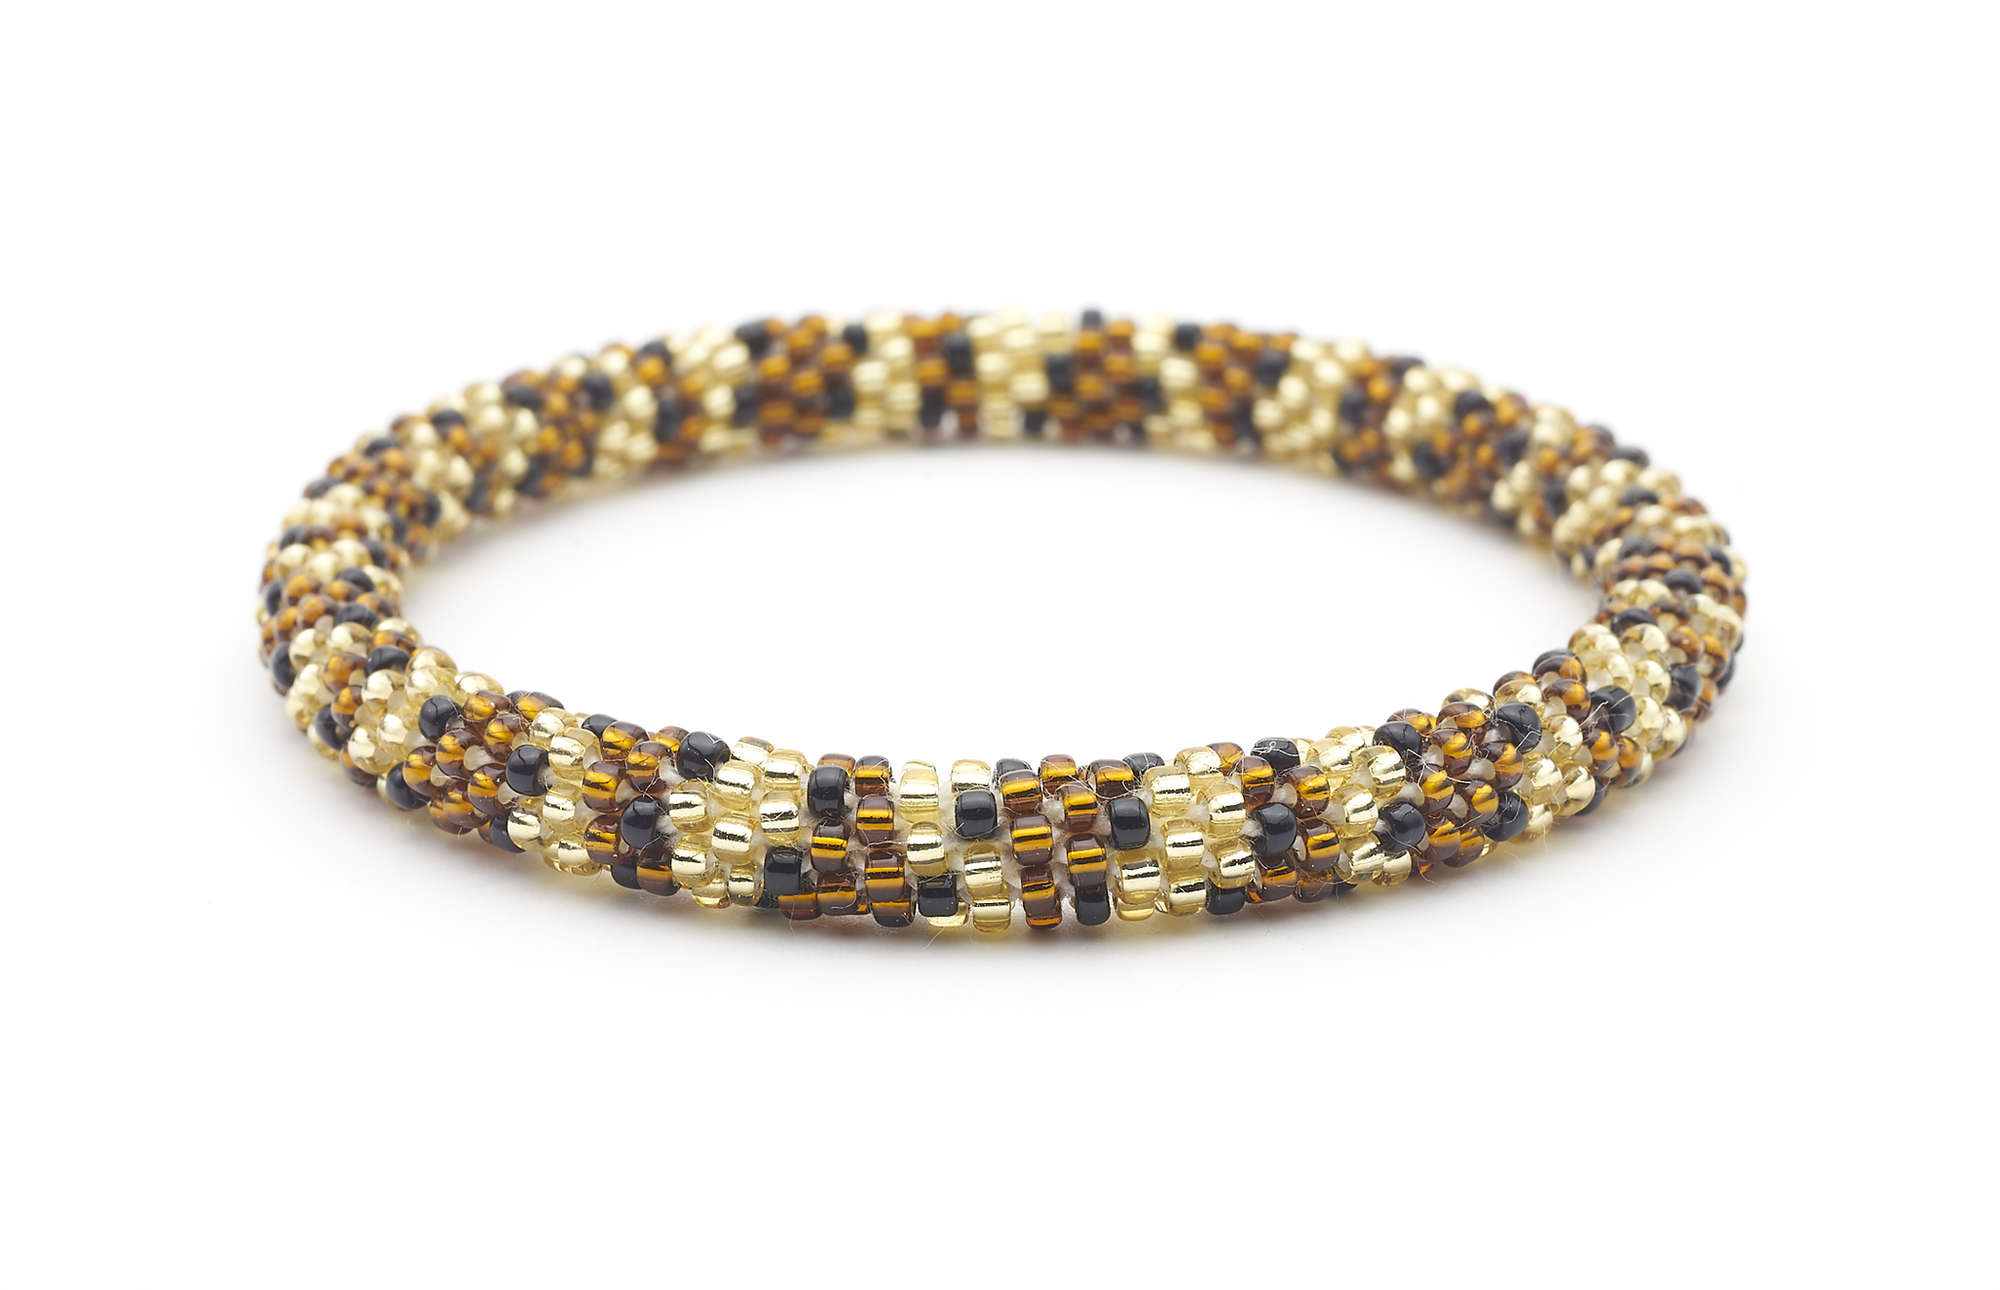 Sashka Co. Extended 8" Bracelet Brown / Gold / Black Leopard Bracelet - Extended 8"